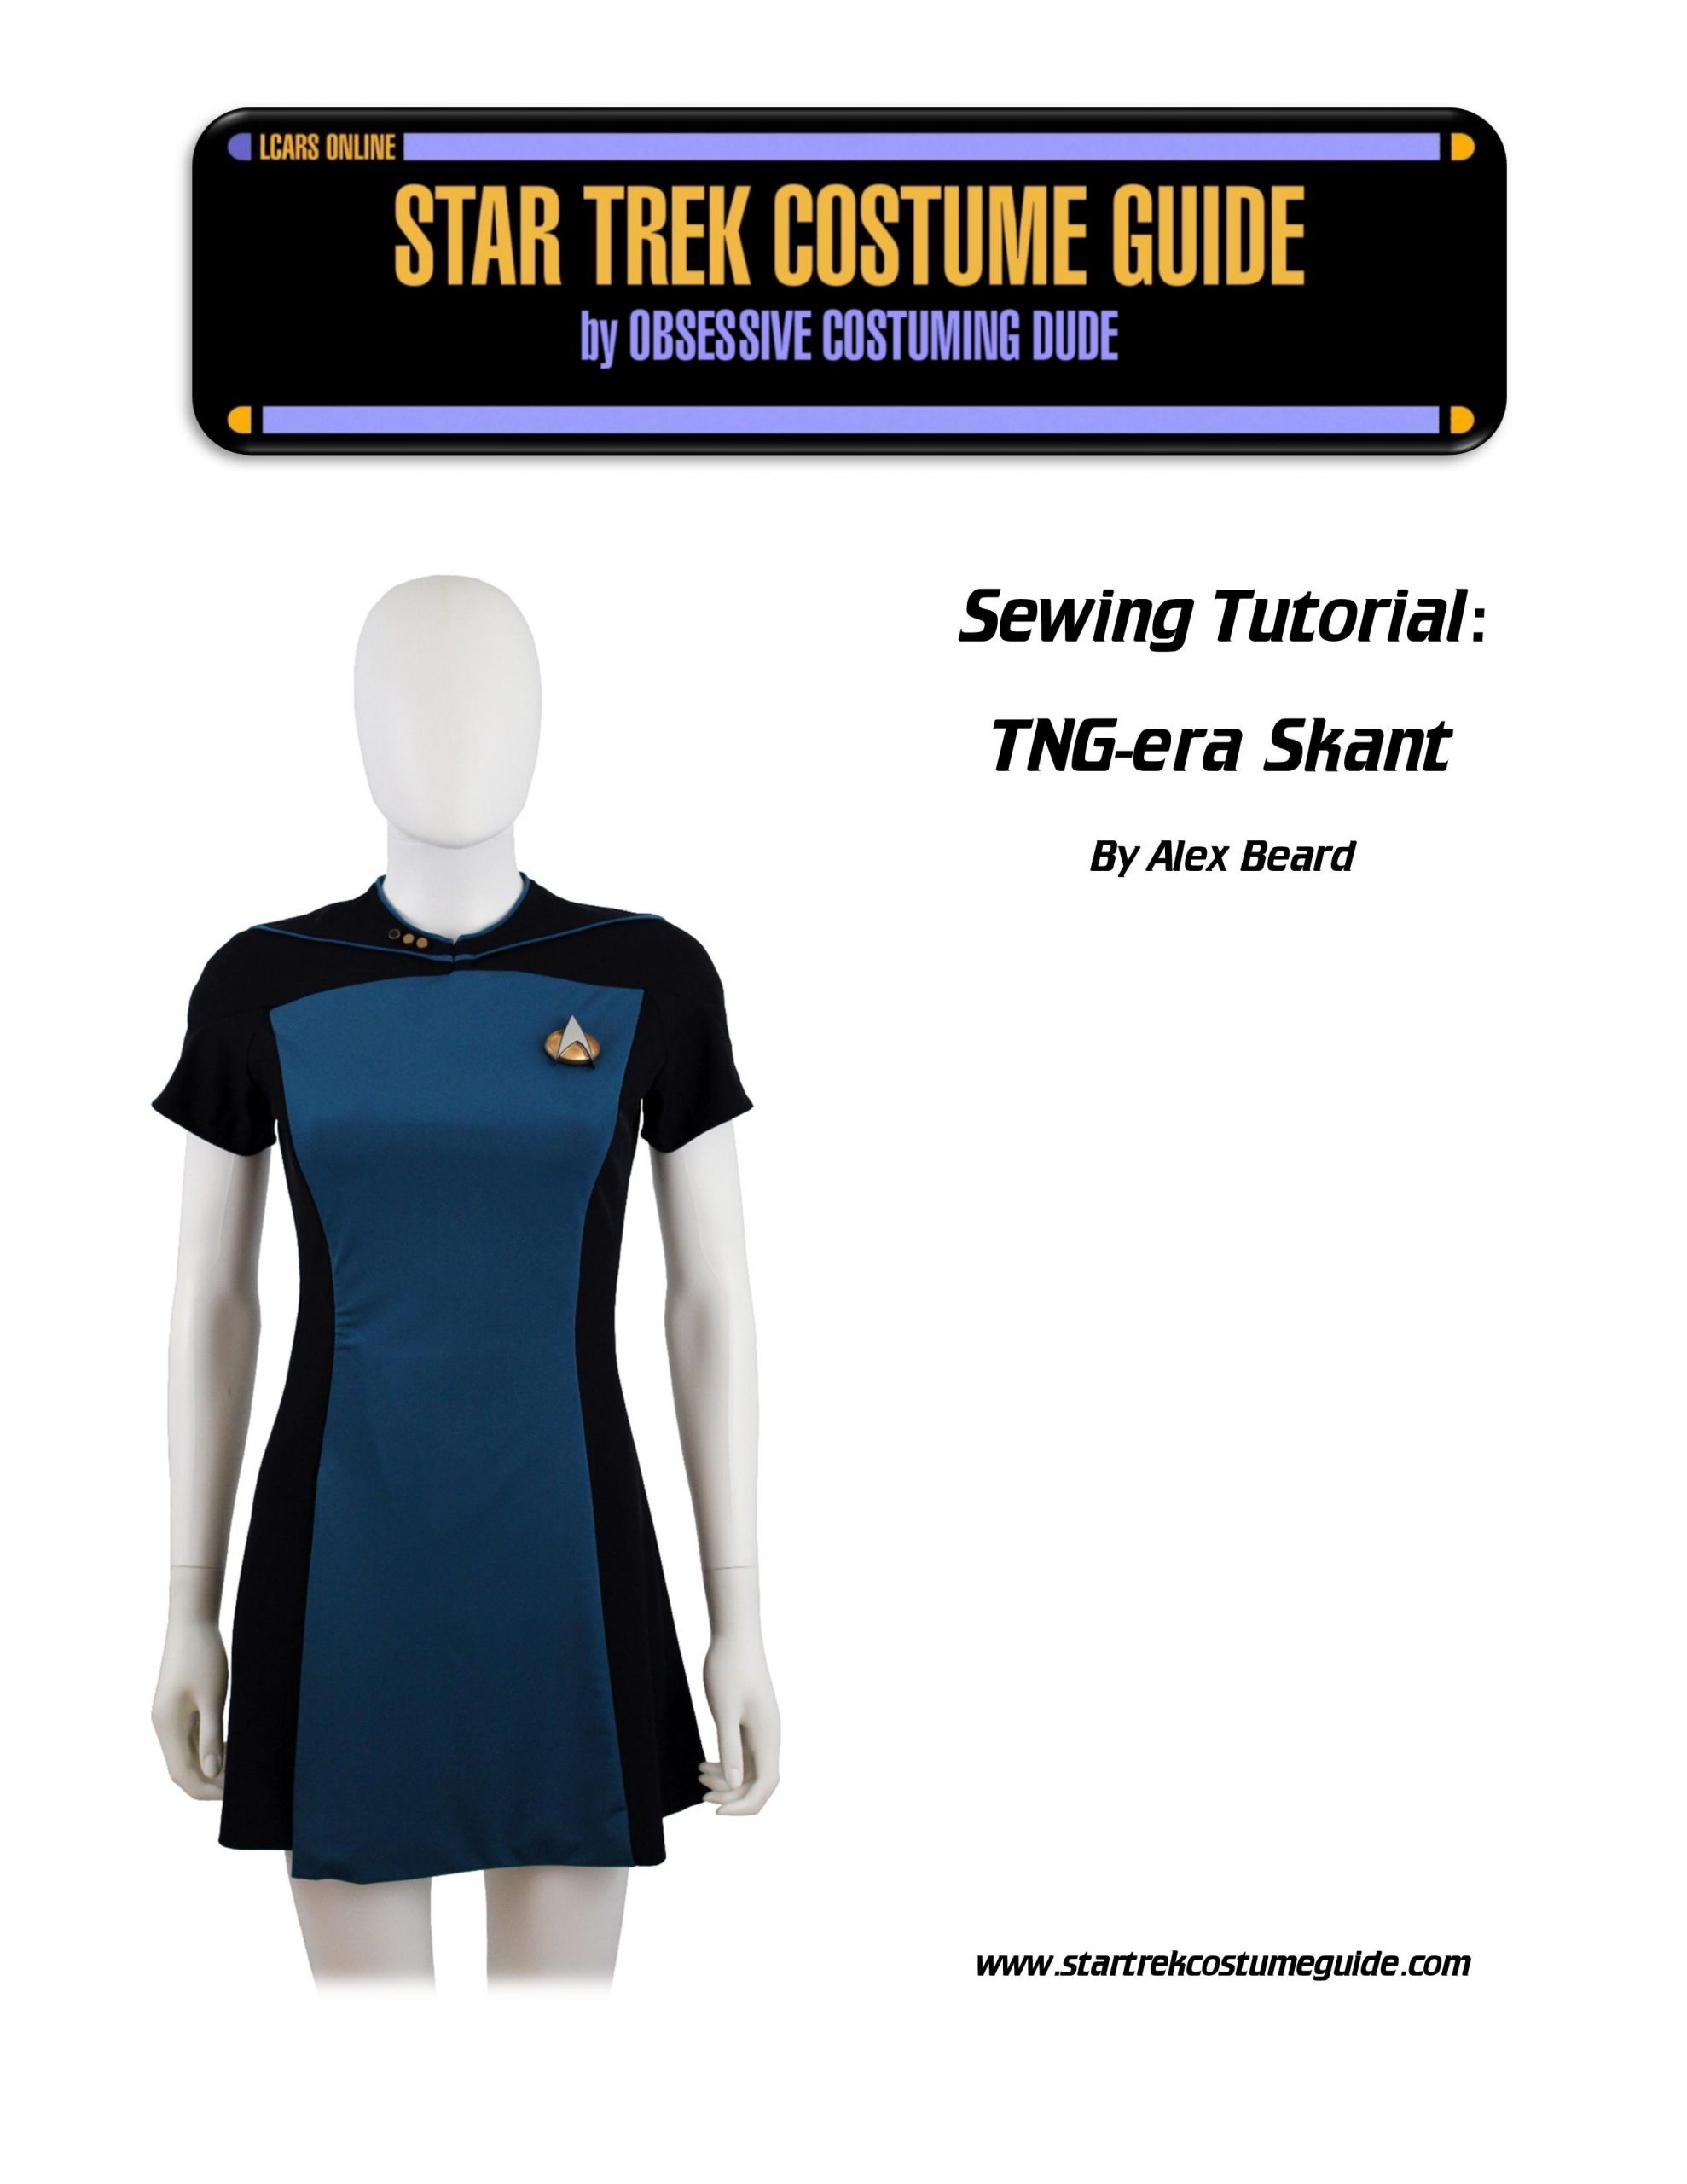 TNG skant sewing tutorial - Star Trek Costume Guide